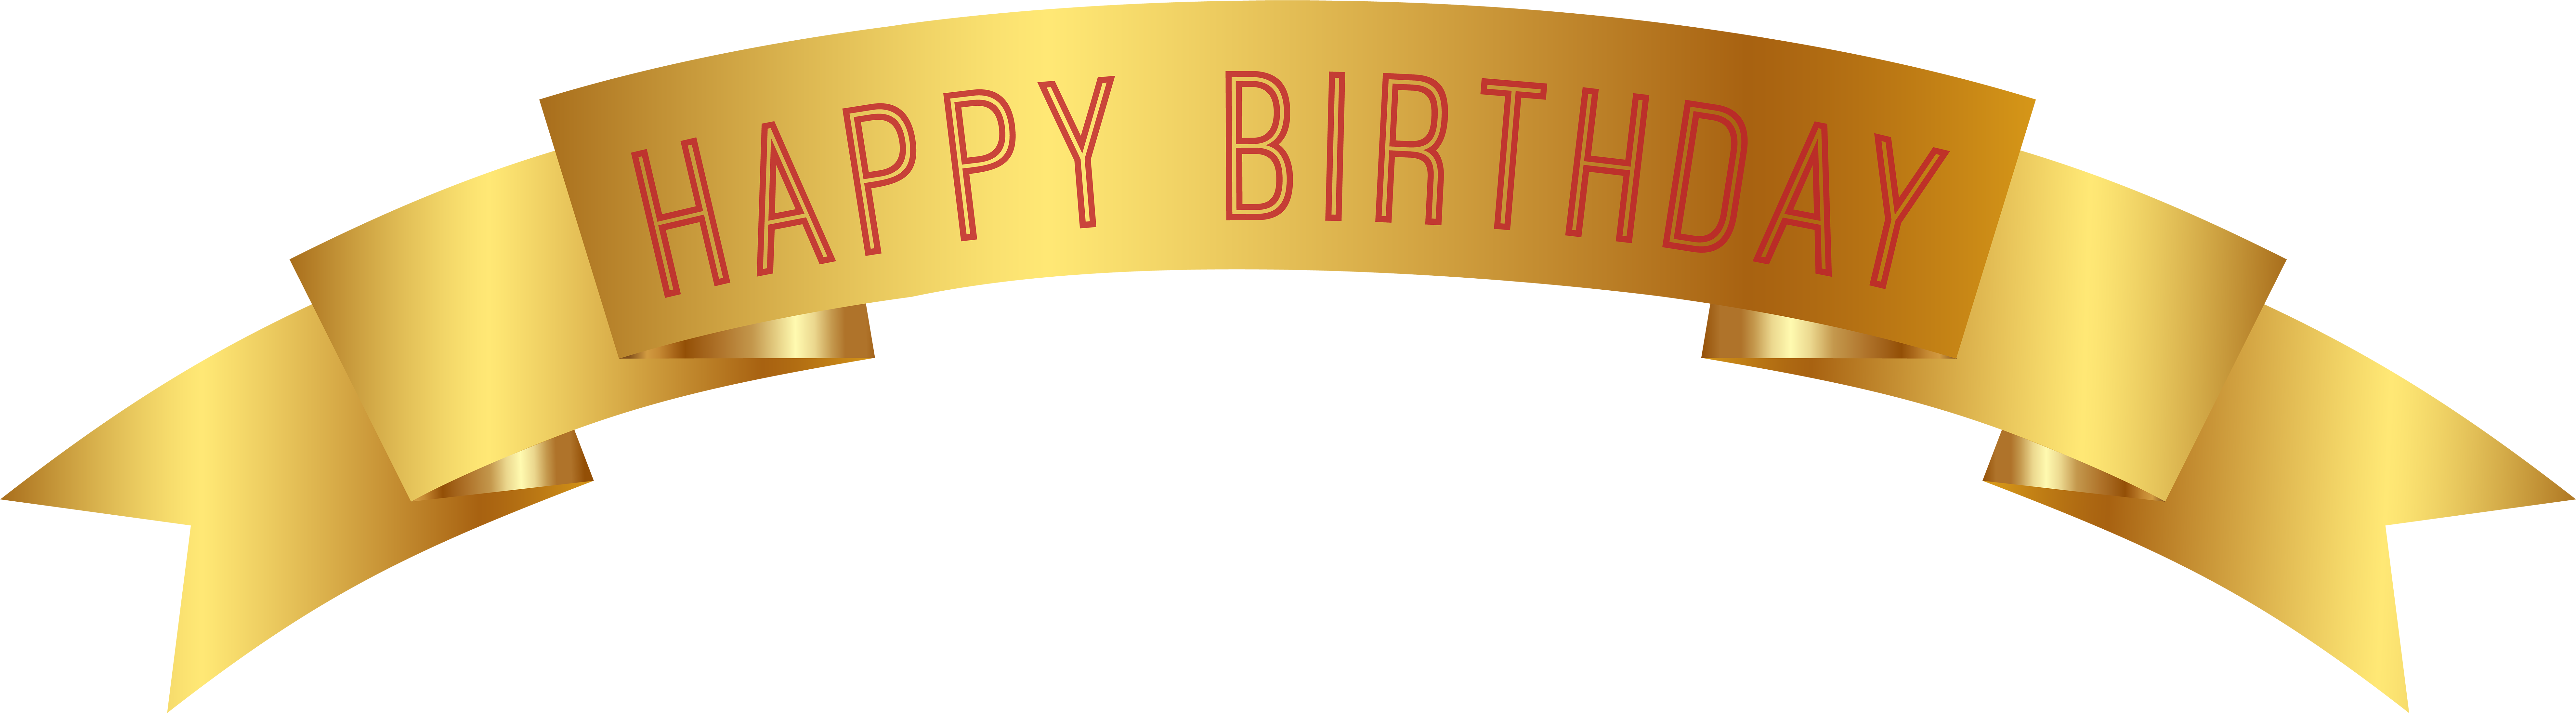 free-happy-birthday-banner-transparent-download-free-happy-birthday-banner-transparent-png